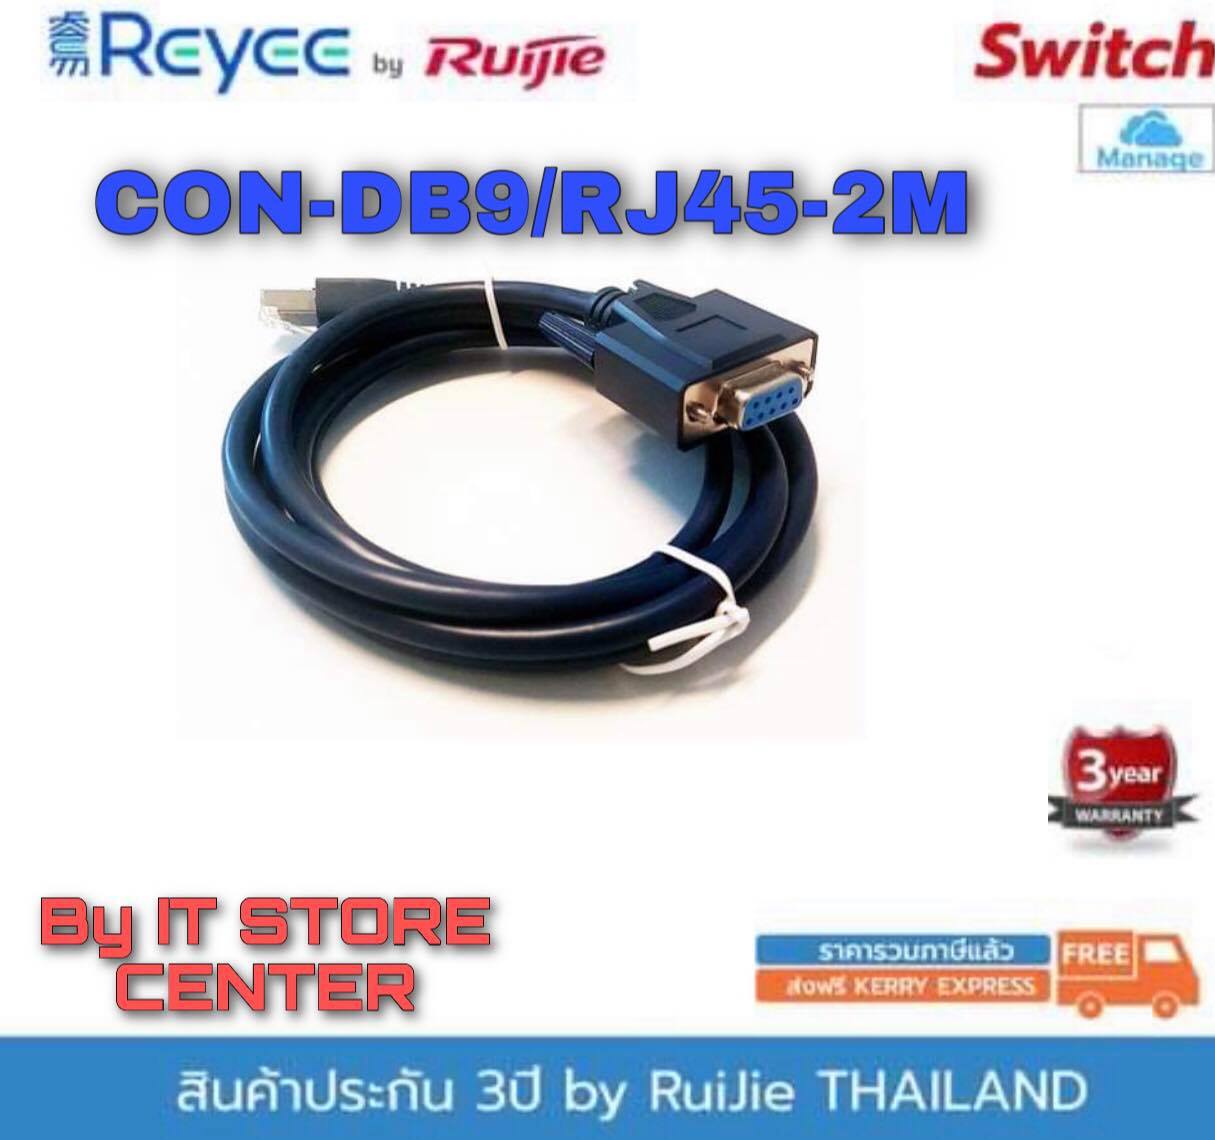 Ruijie CON-DB9/RJ45-2M